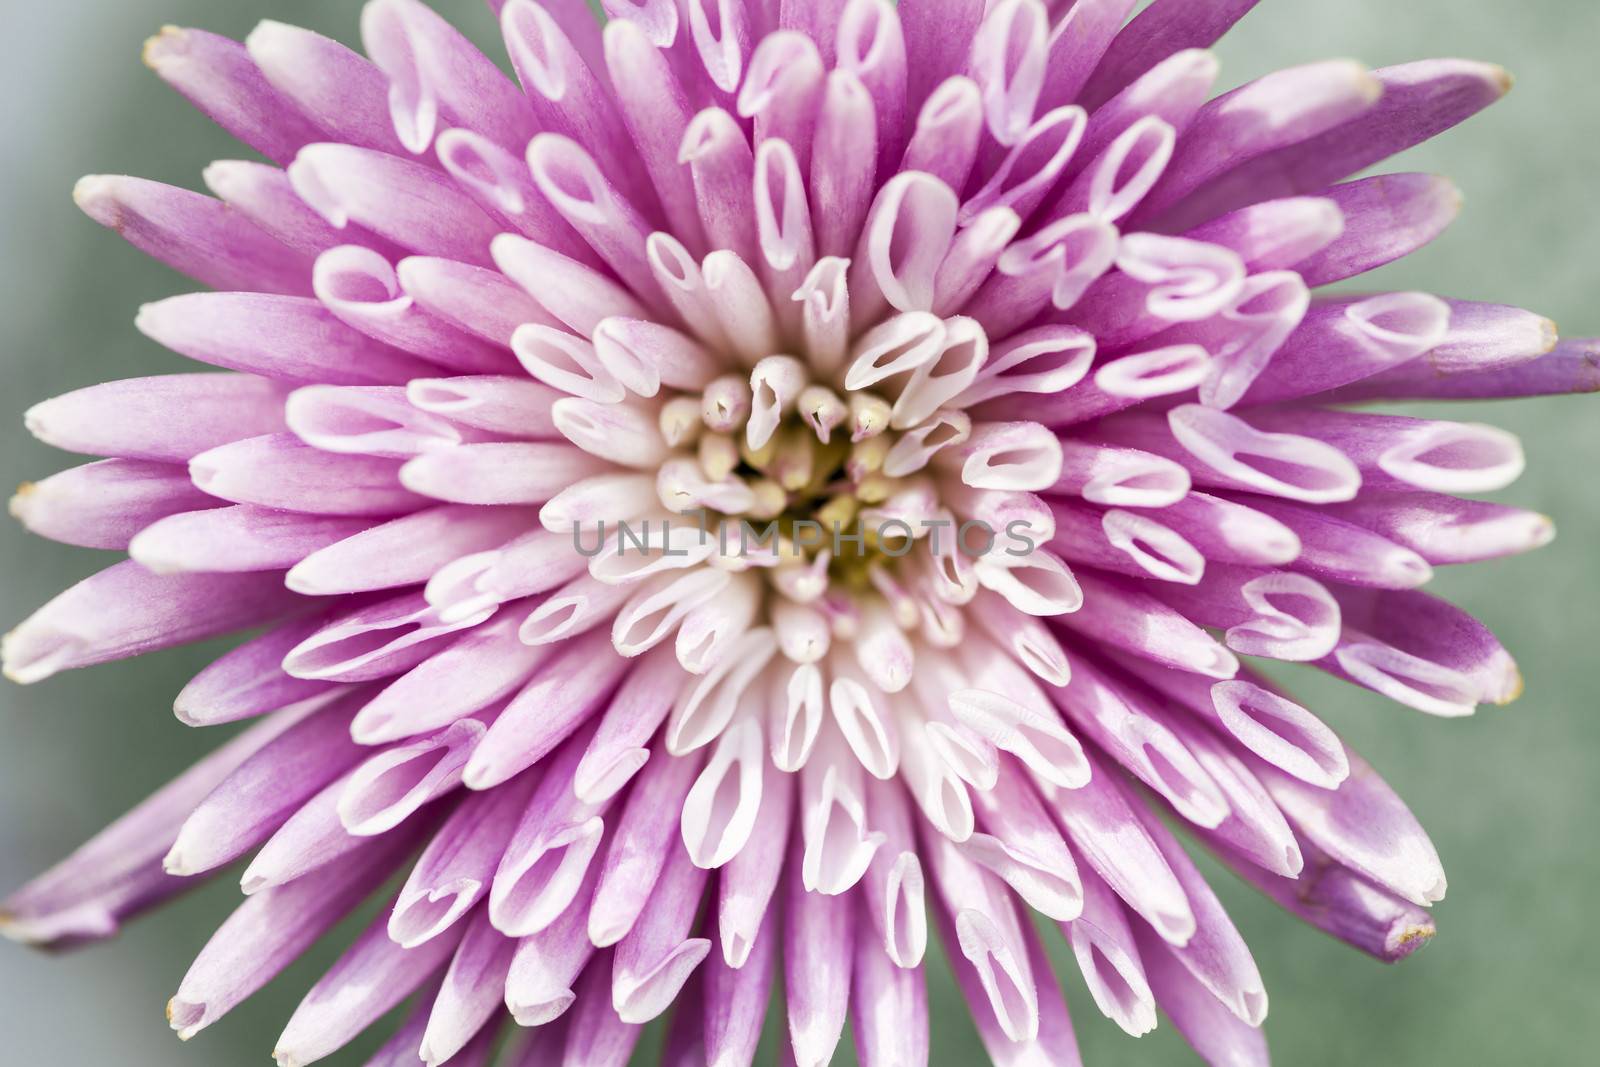 Chrysanthemum flower closeup by elenathewise